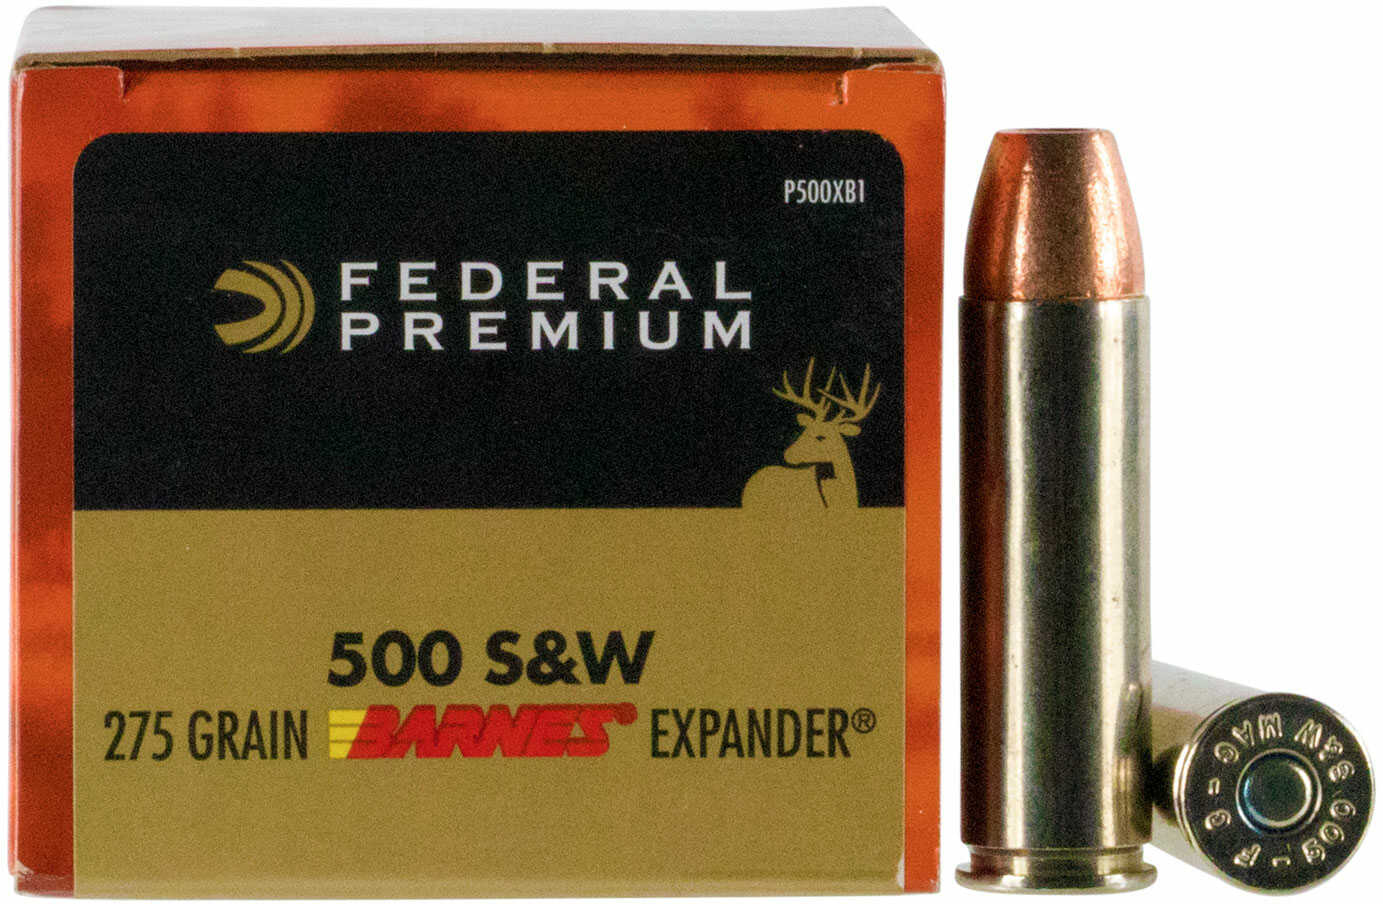 Federal Premium Pistol Ammo 500 S&W Mag. 275 gr. Barnes Expander 20 rd. Model: P500XB1